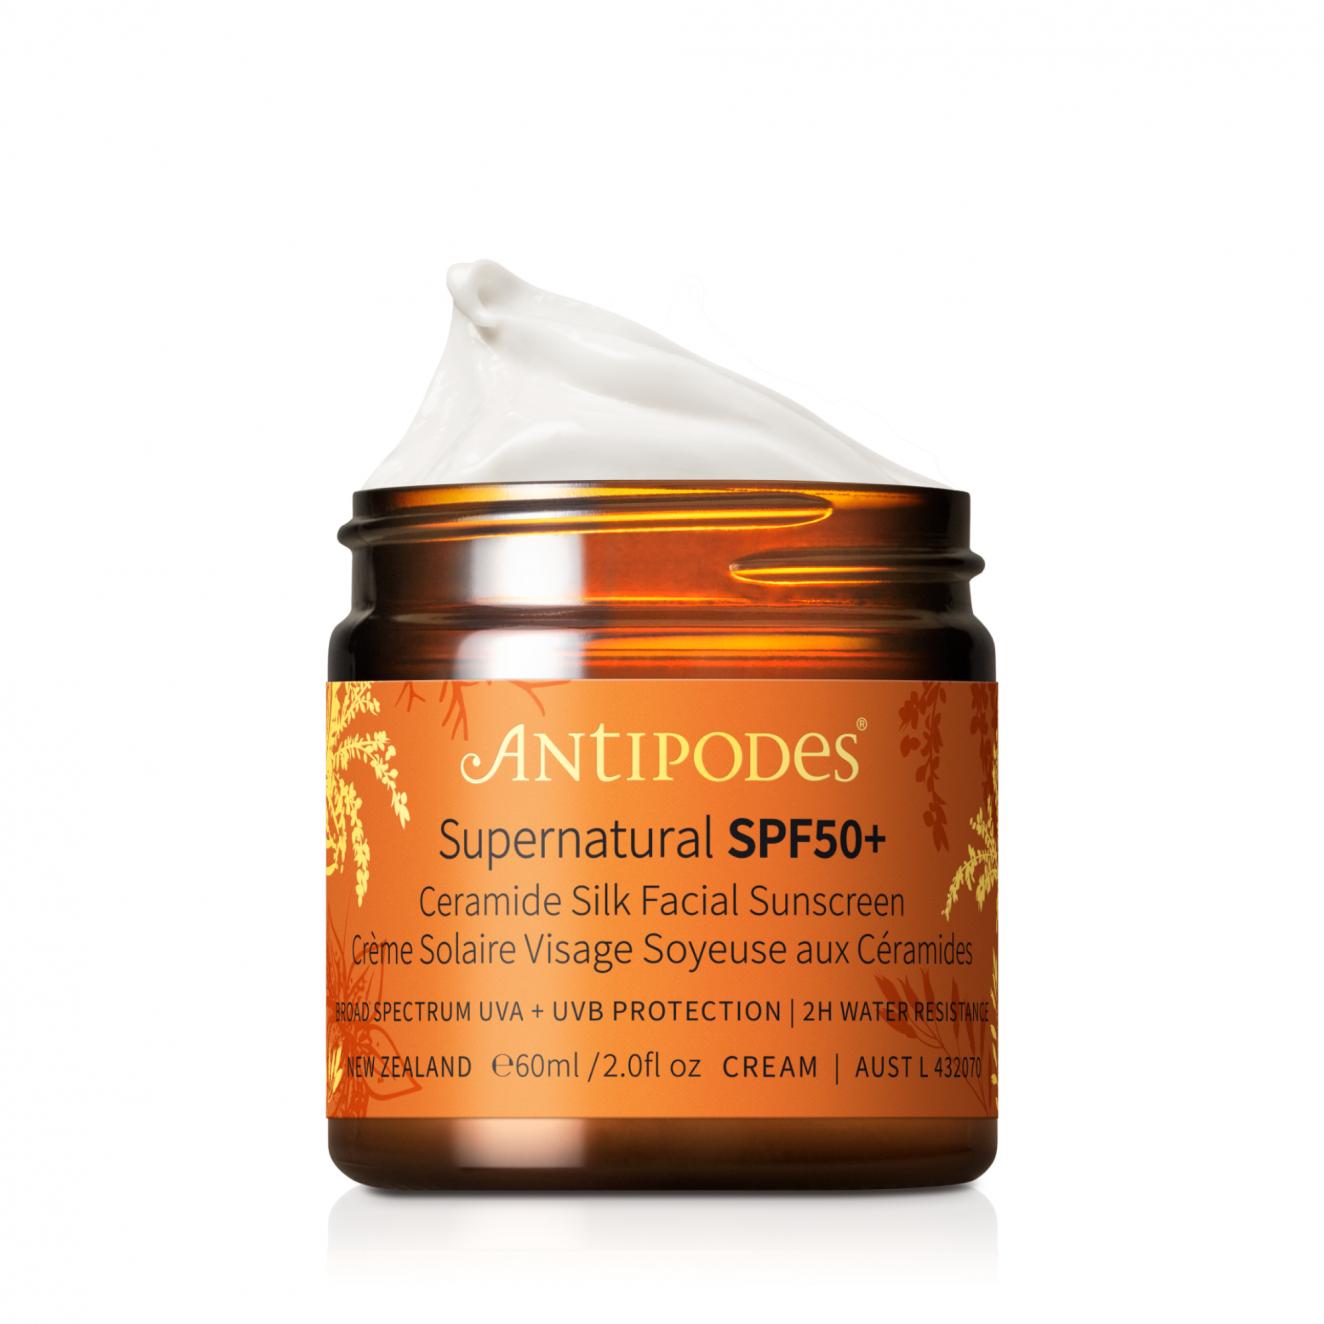 Antipodes Supernatural SPF50+ Ceremide Silk Facial Sunscreen 60ml